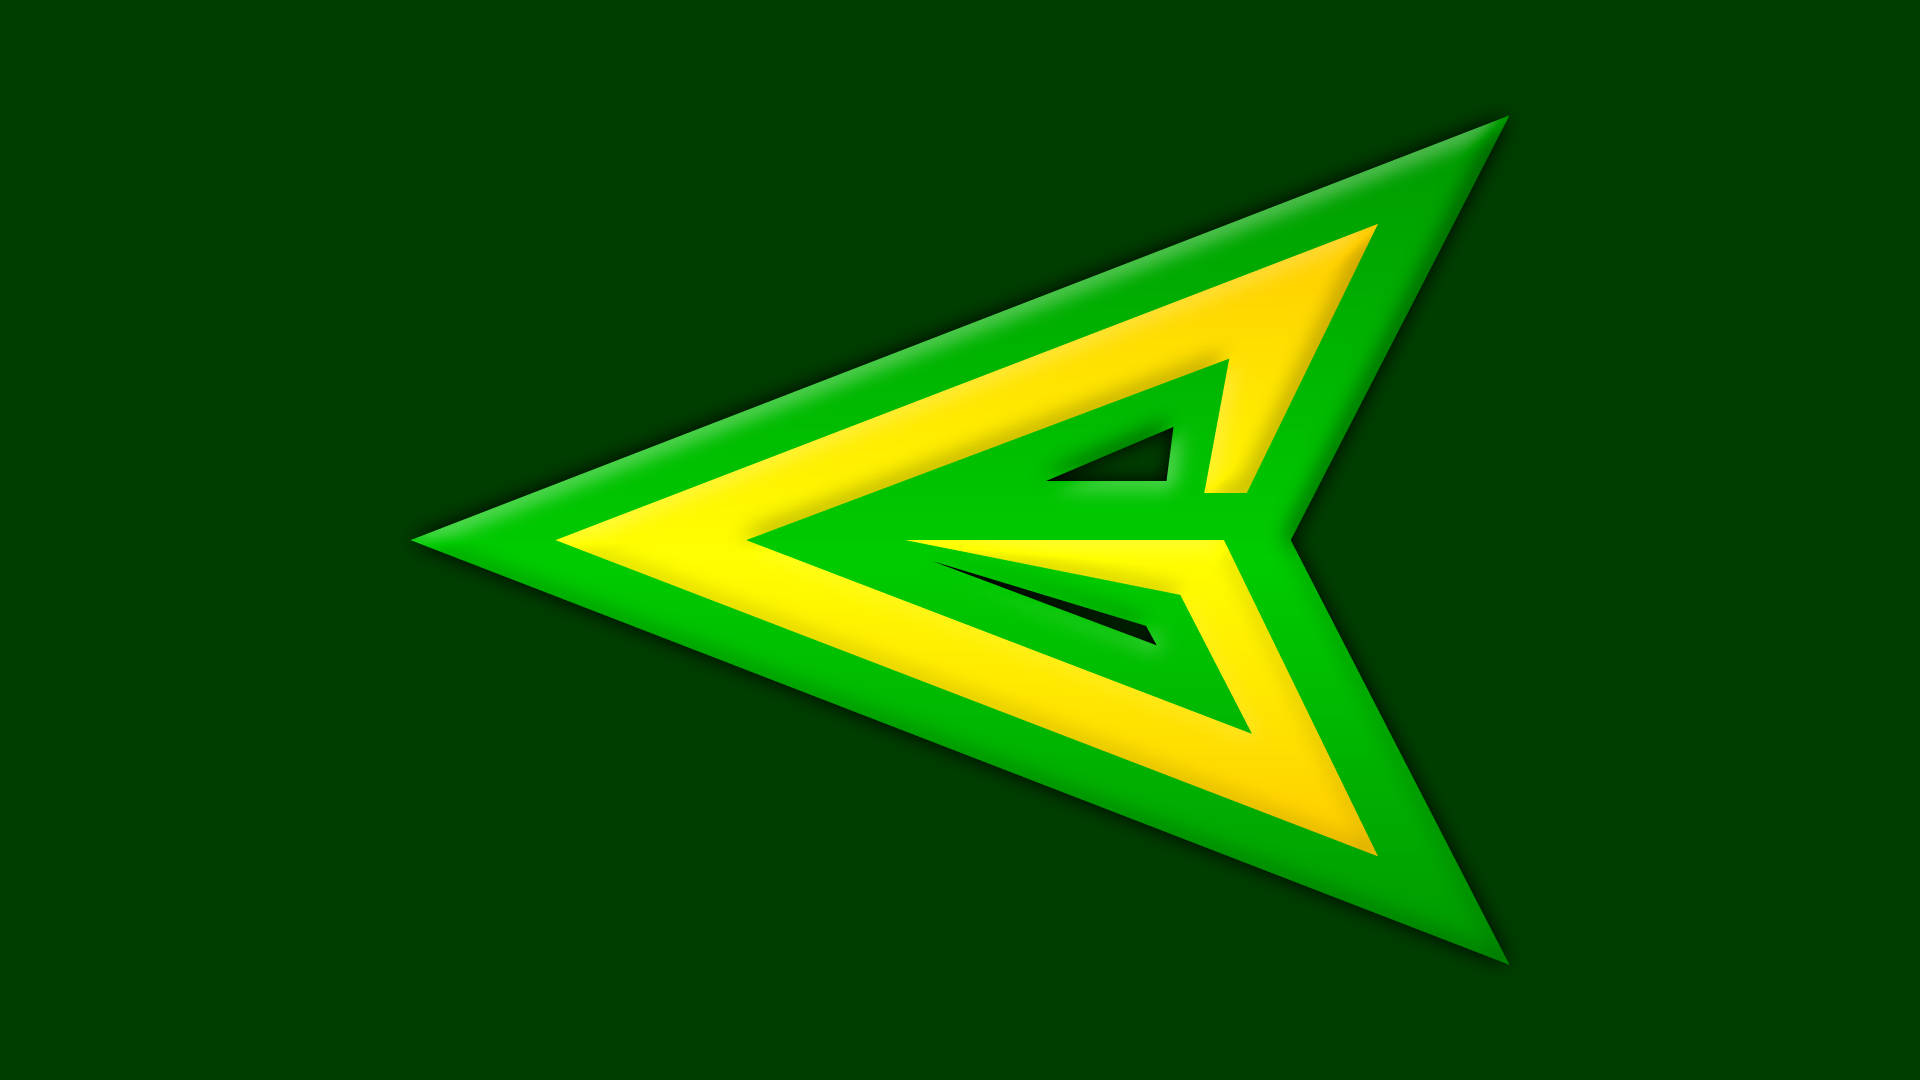 Green Arrow Symbol